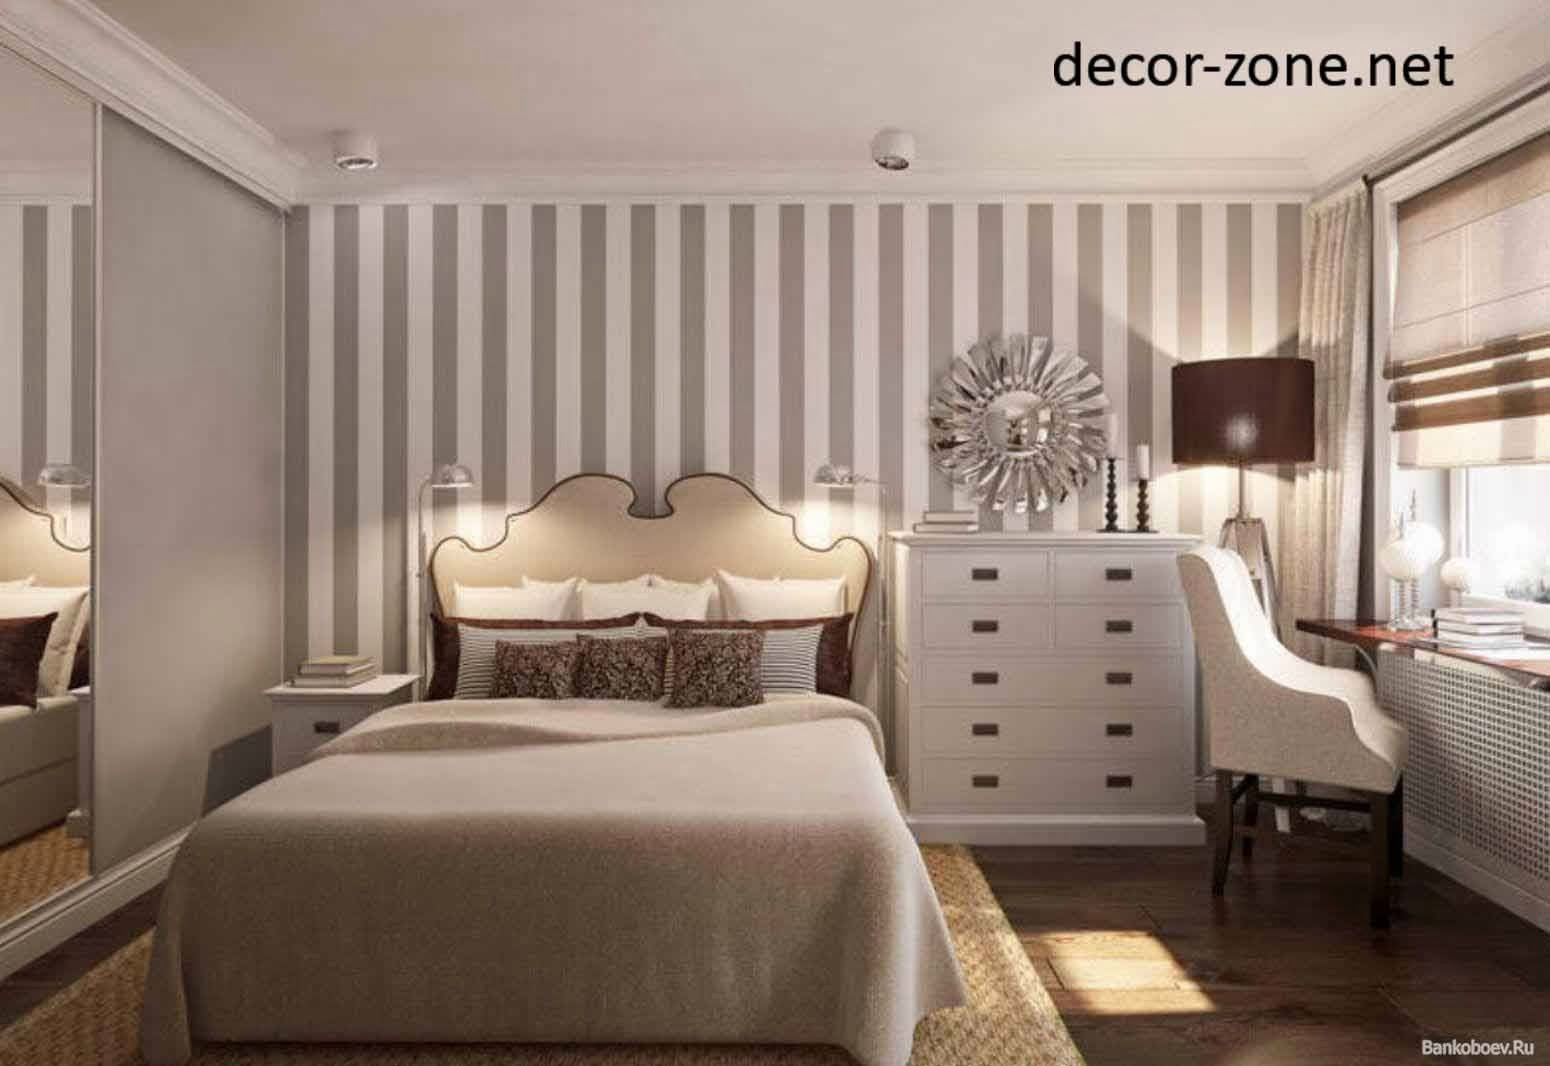 Wallpaper For Bedroom Walls Designs
 wall decor ideas for the master bedroom